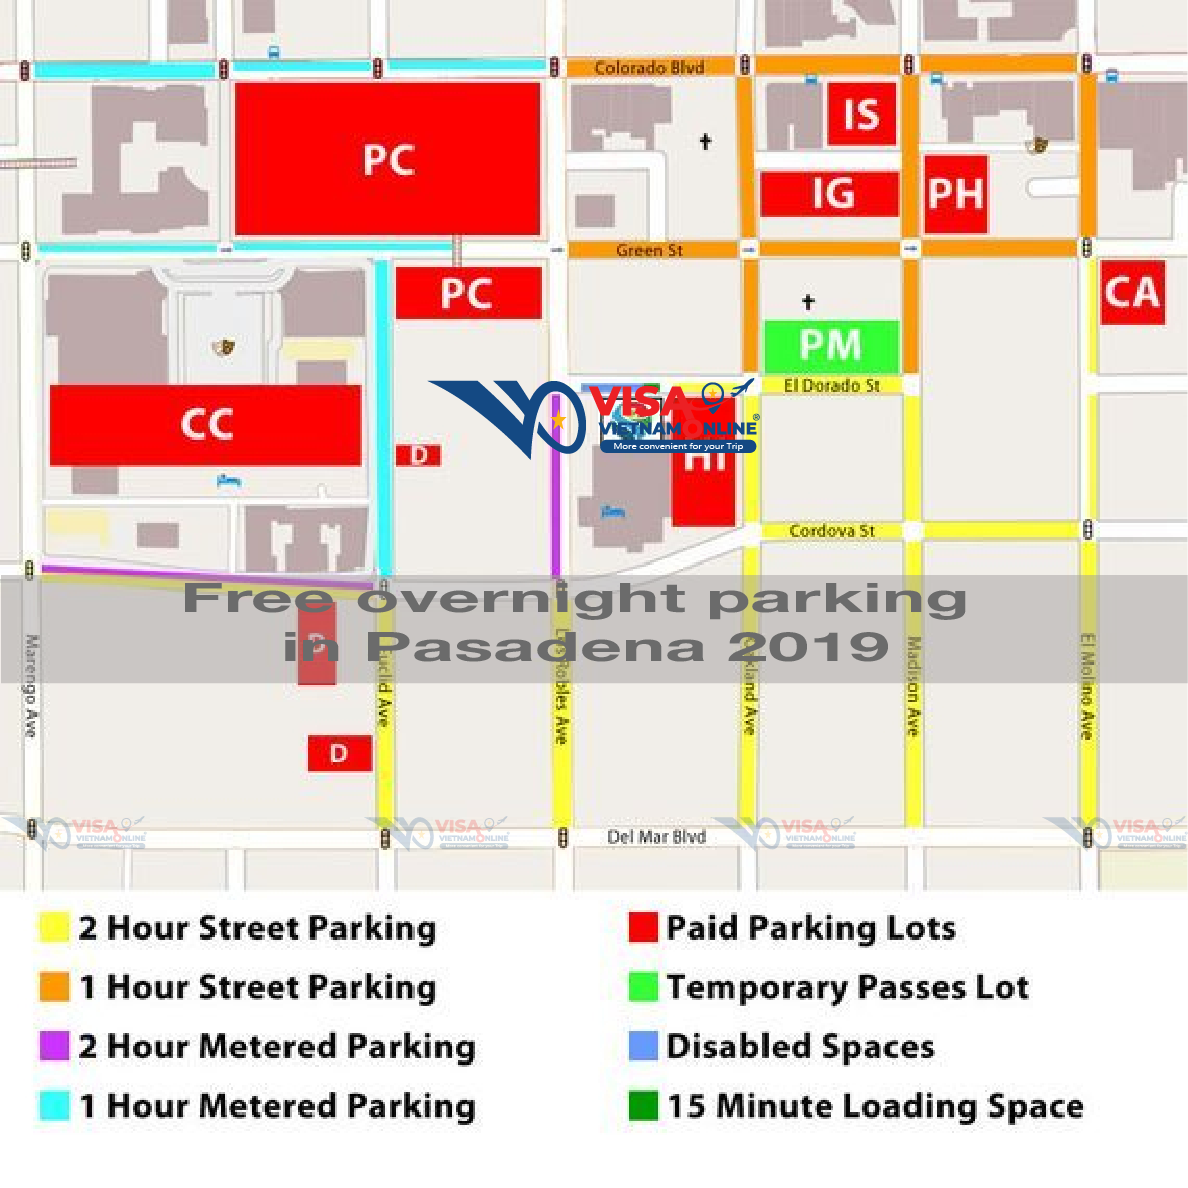 Free overnight parking in Pasadena 2019